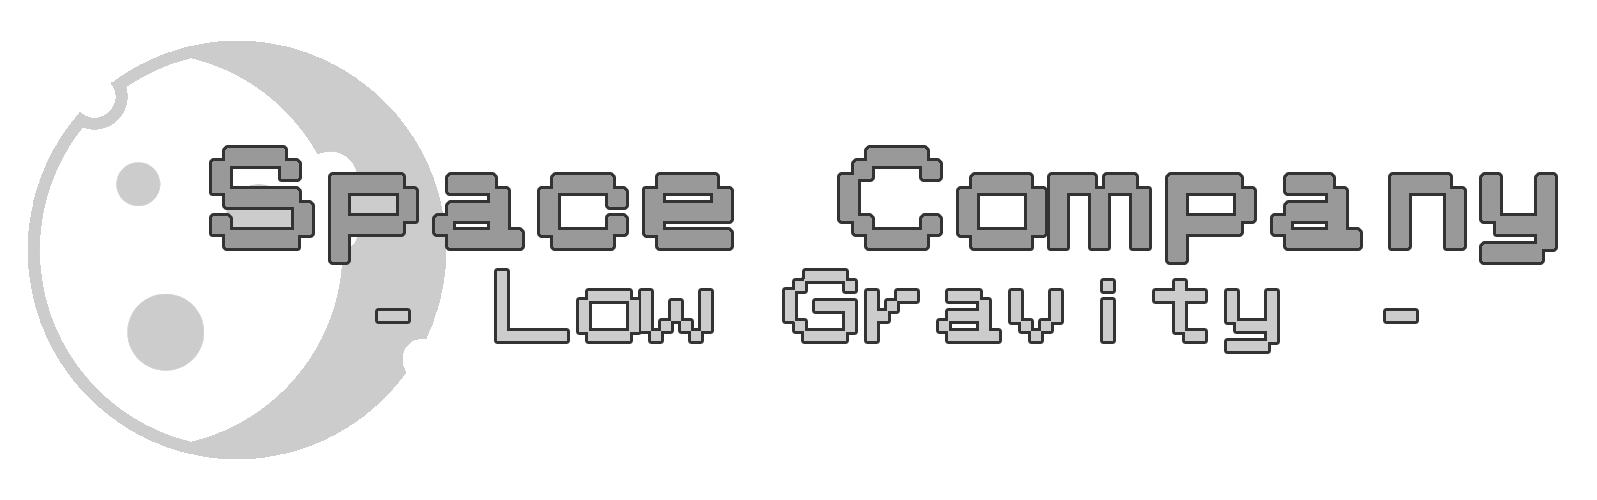 SC_lowgravity_icon.png